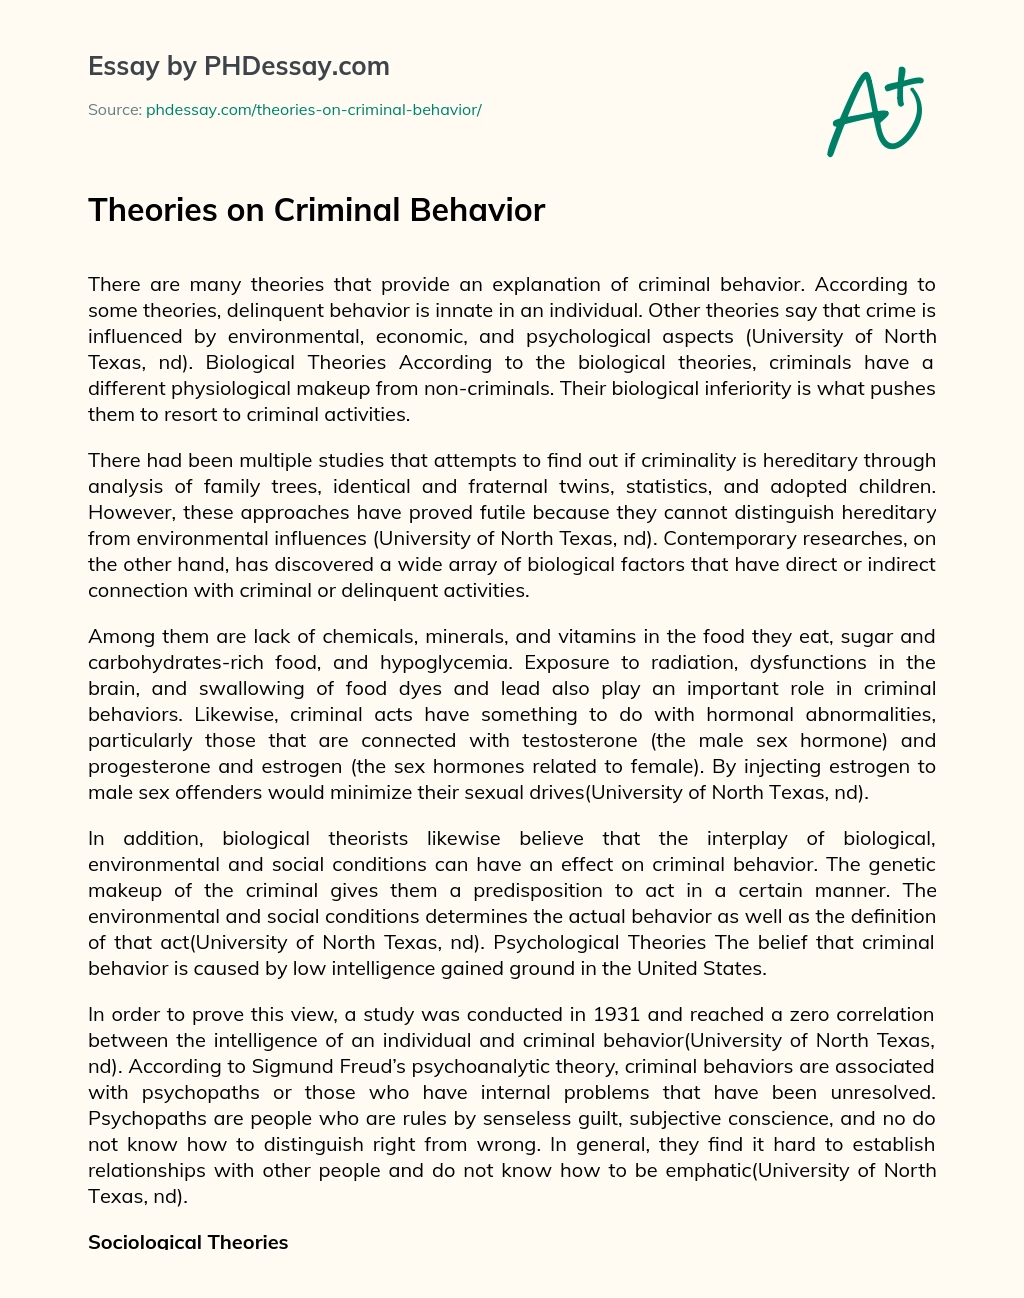 Theories on Criminal Behavior essay